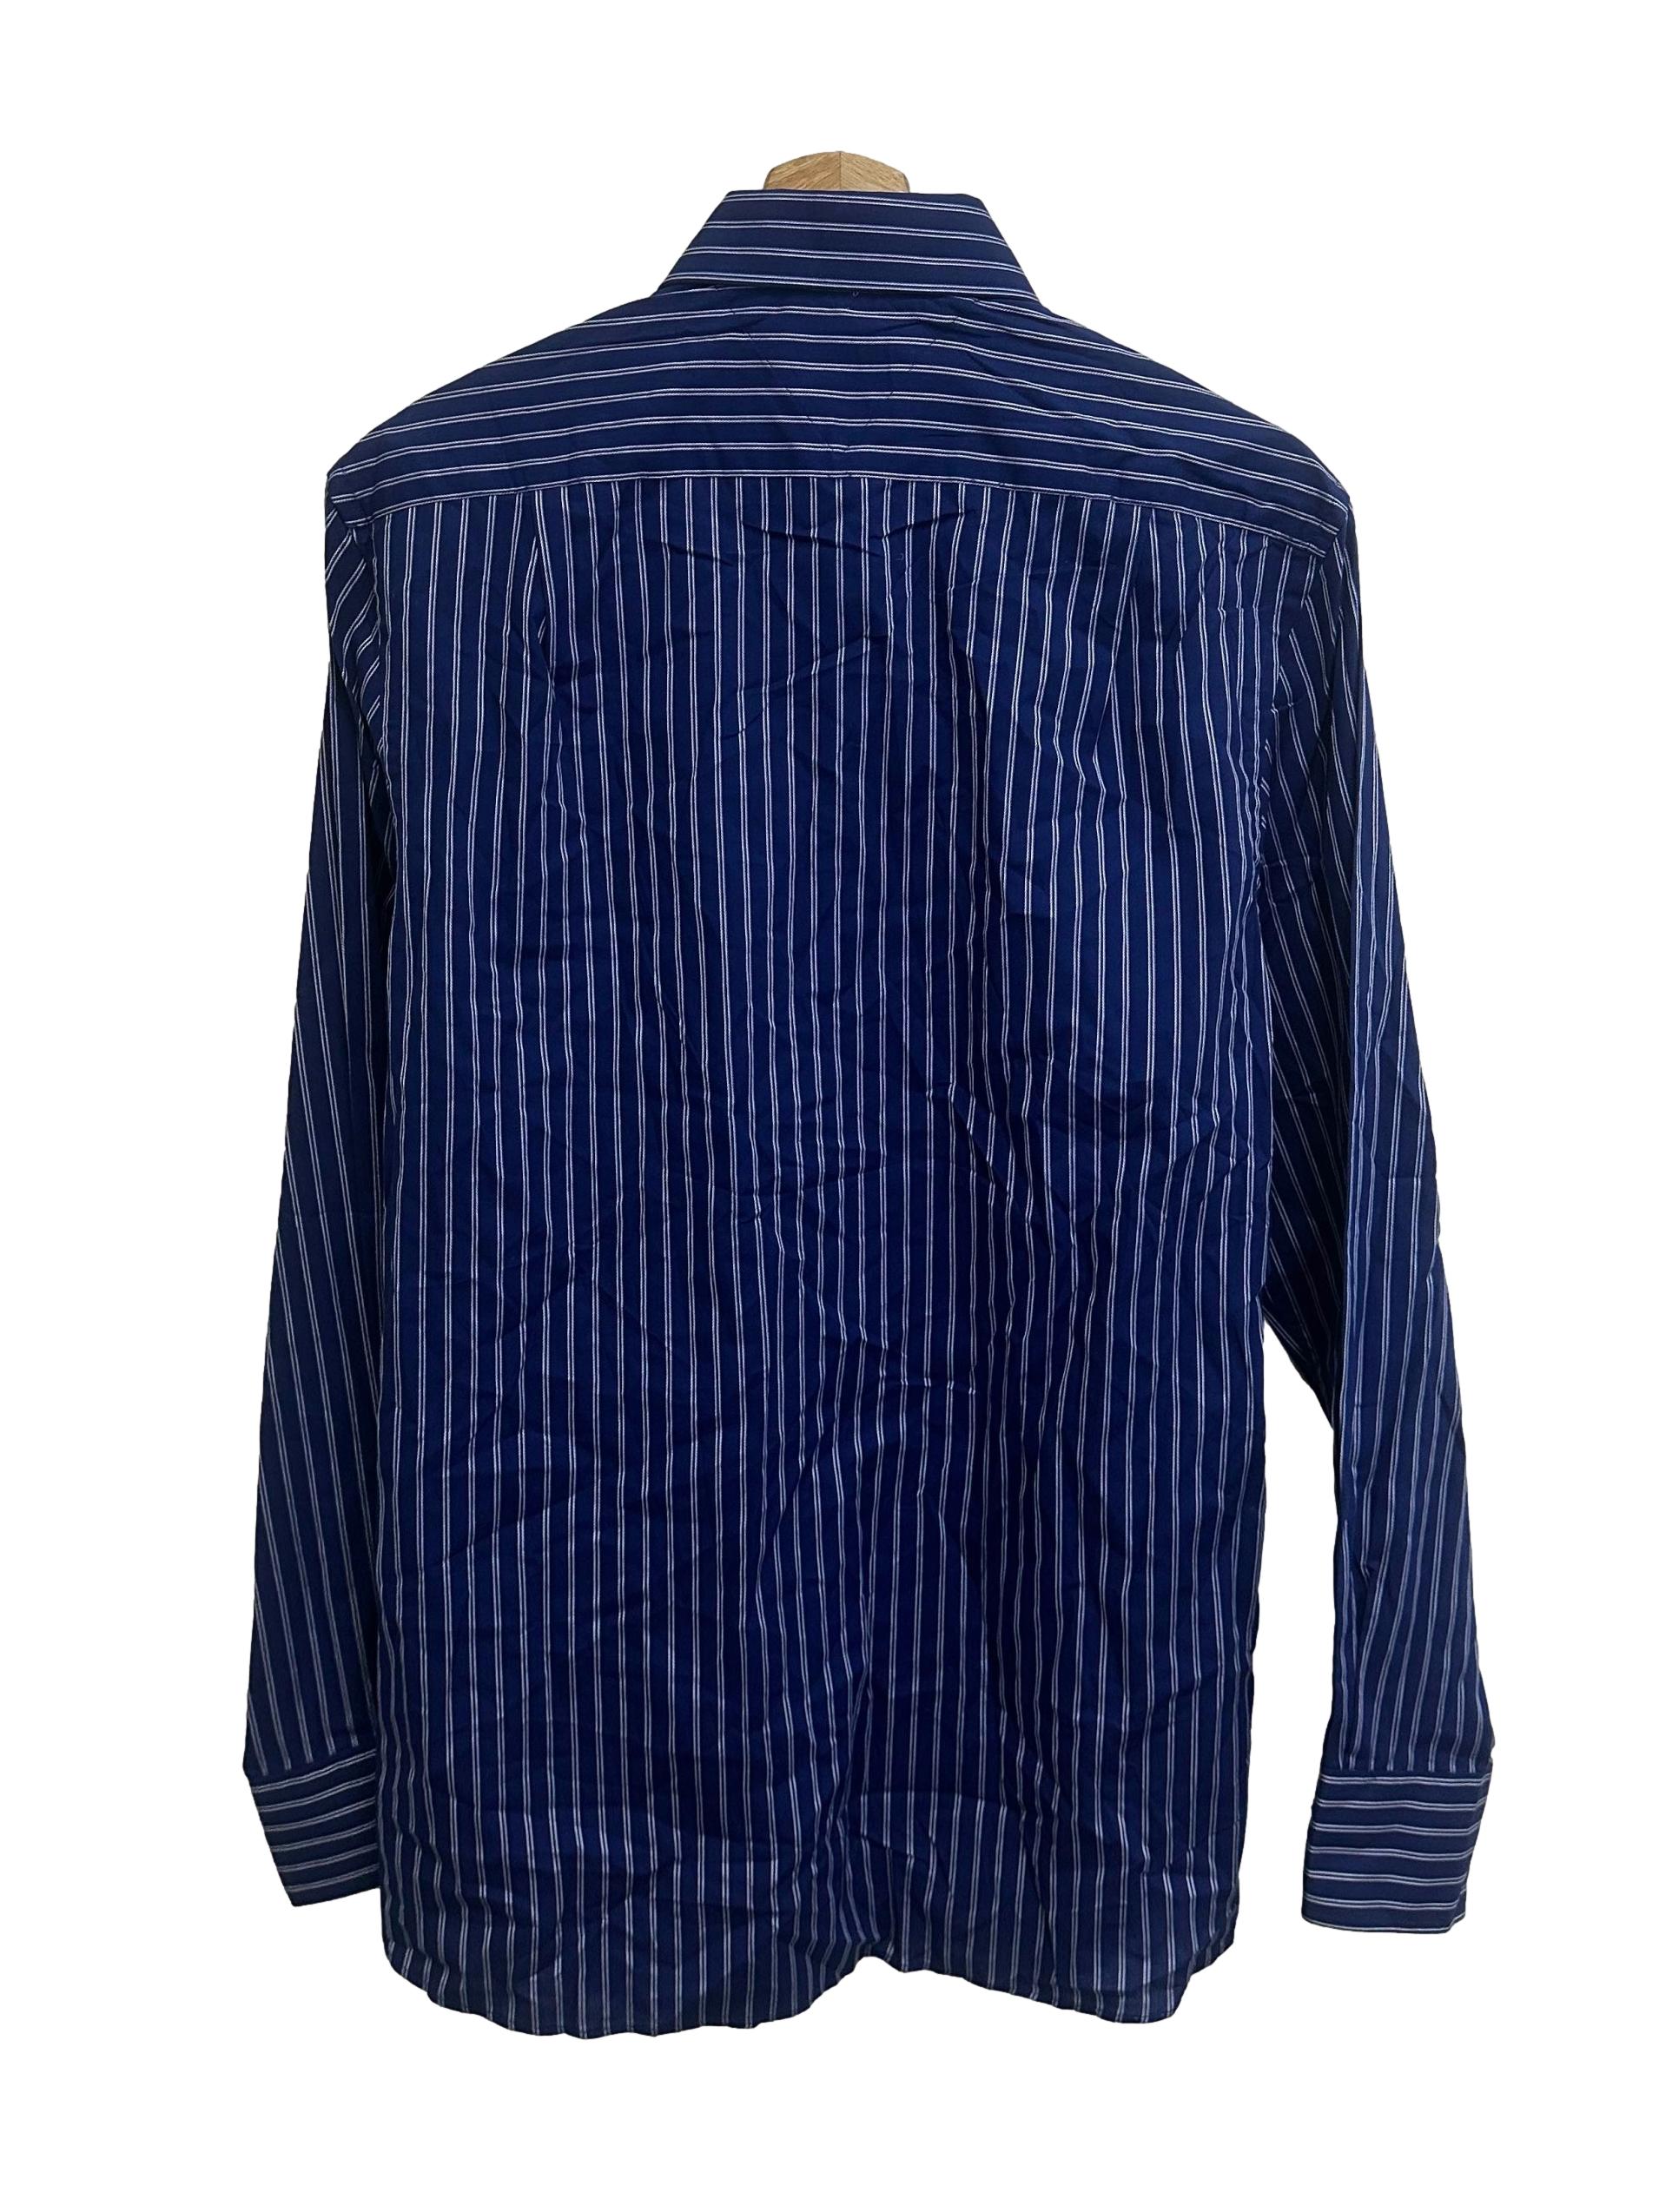 Dark Blue Striped Button Down Shirt